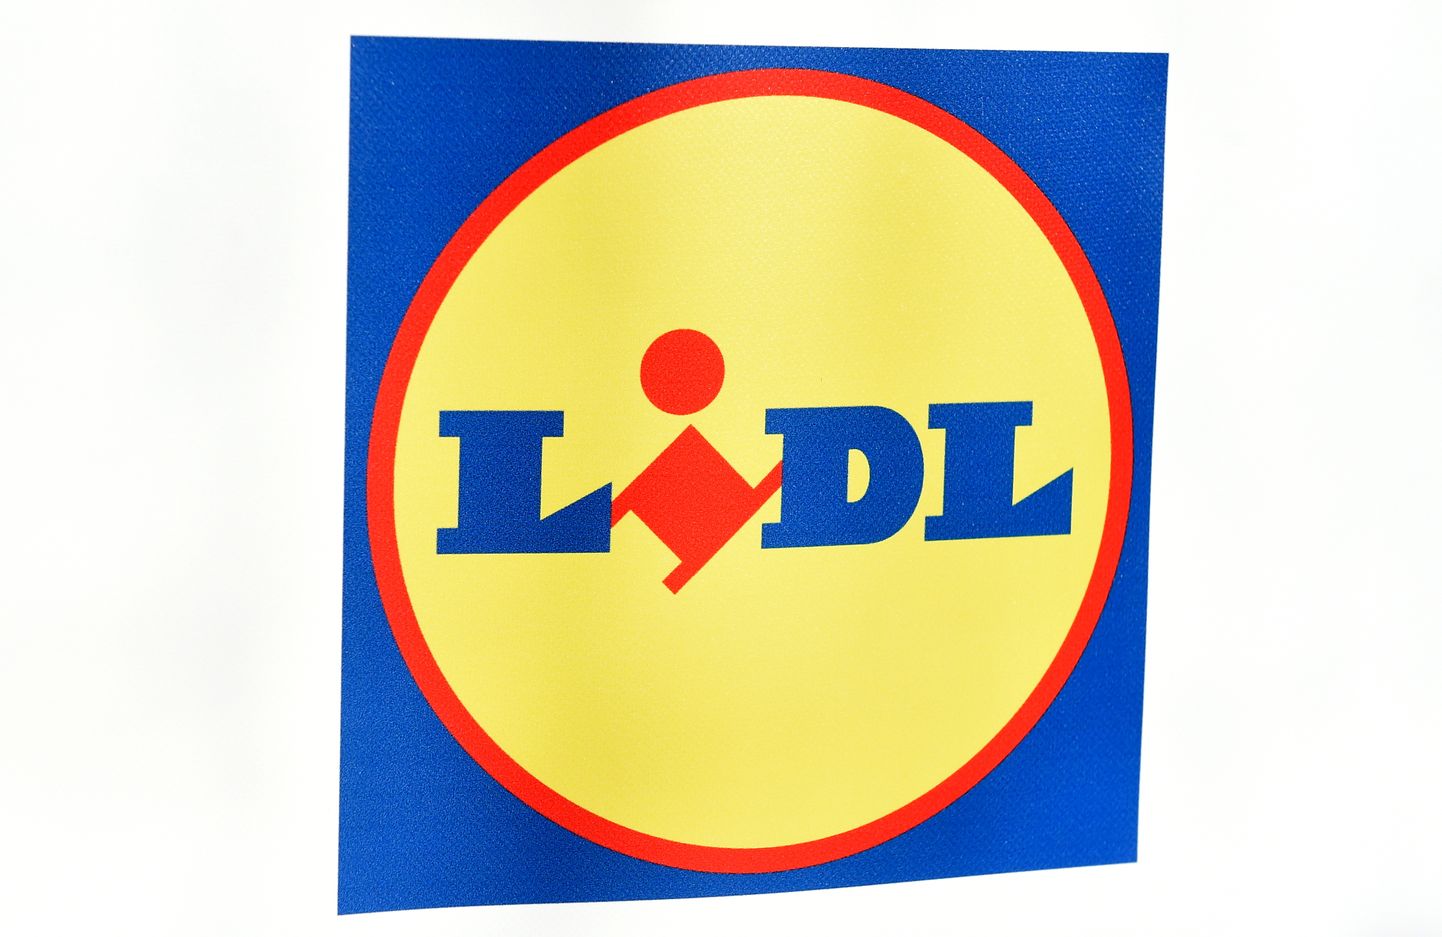 "Lidl" logo.